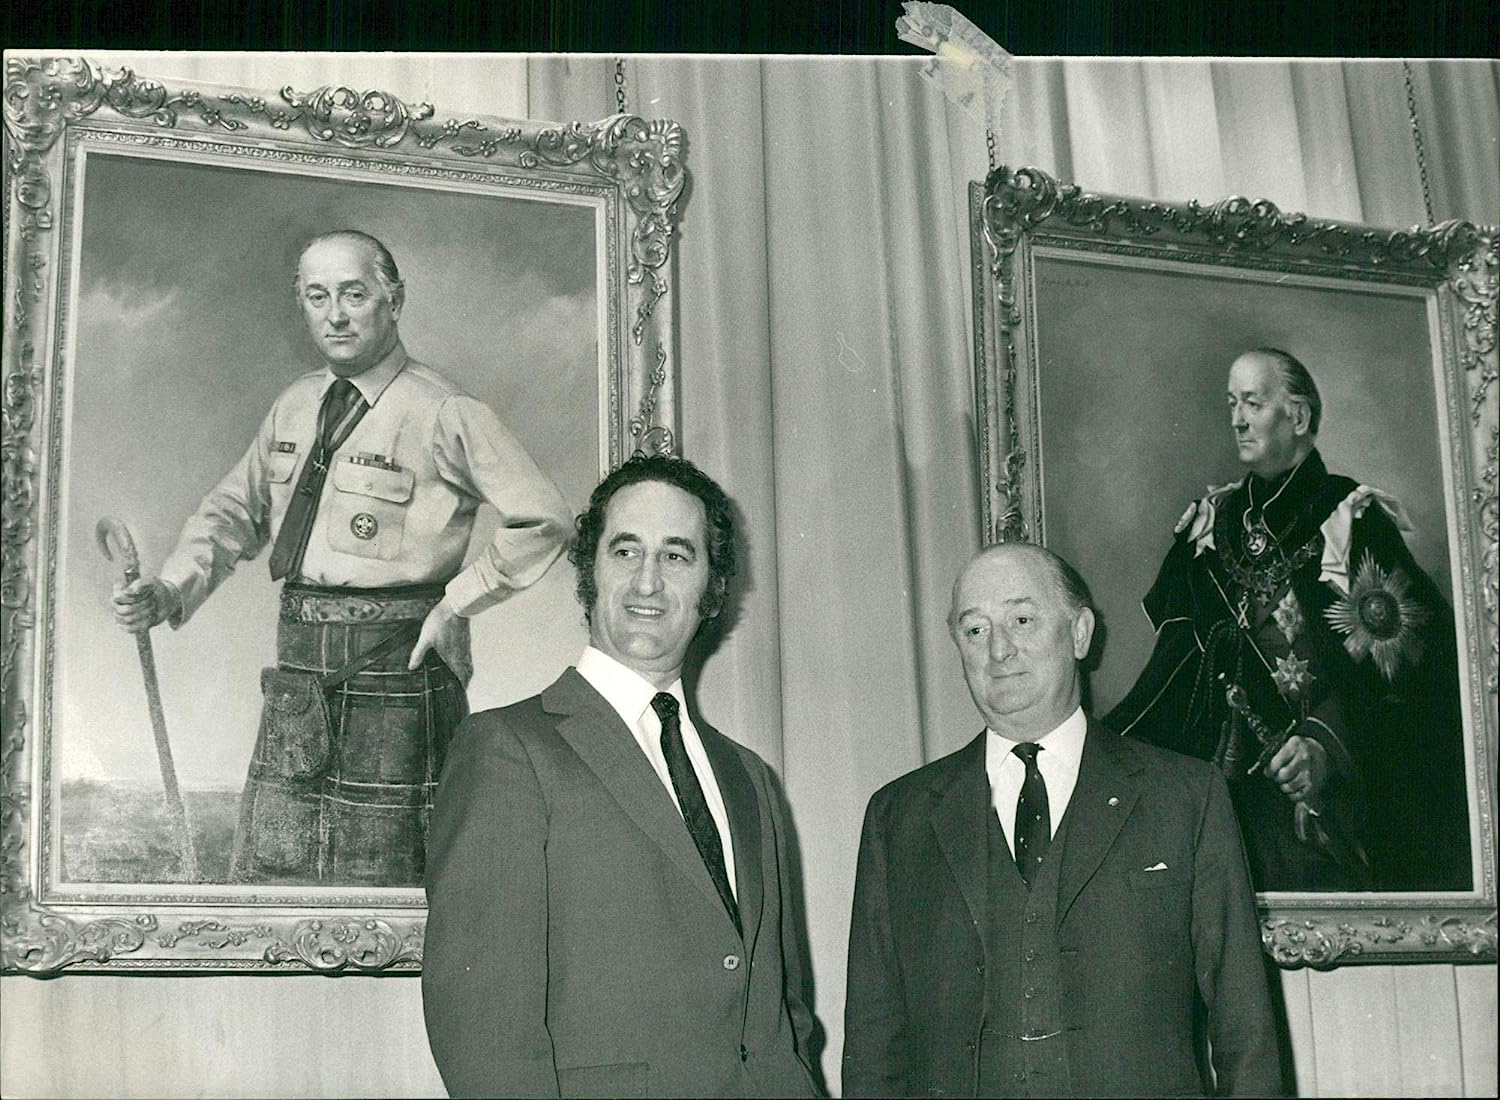 Lord Charles Maclean with John Hughes Hallet, 1973